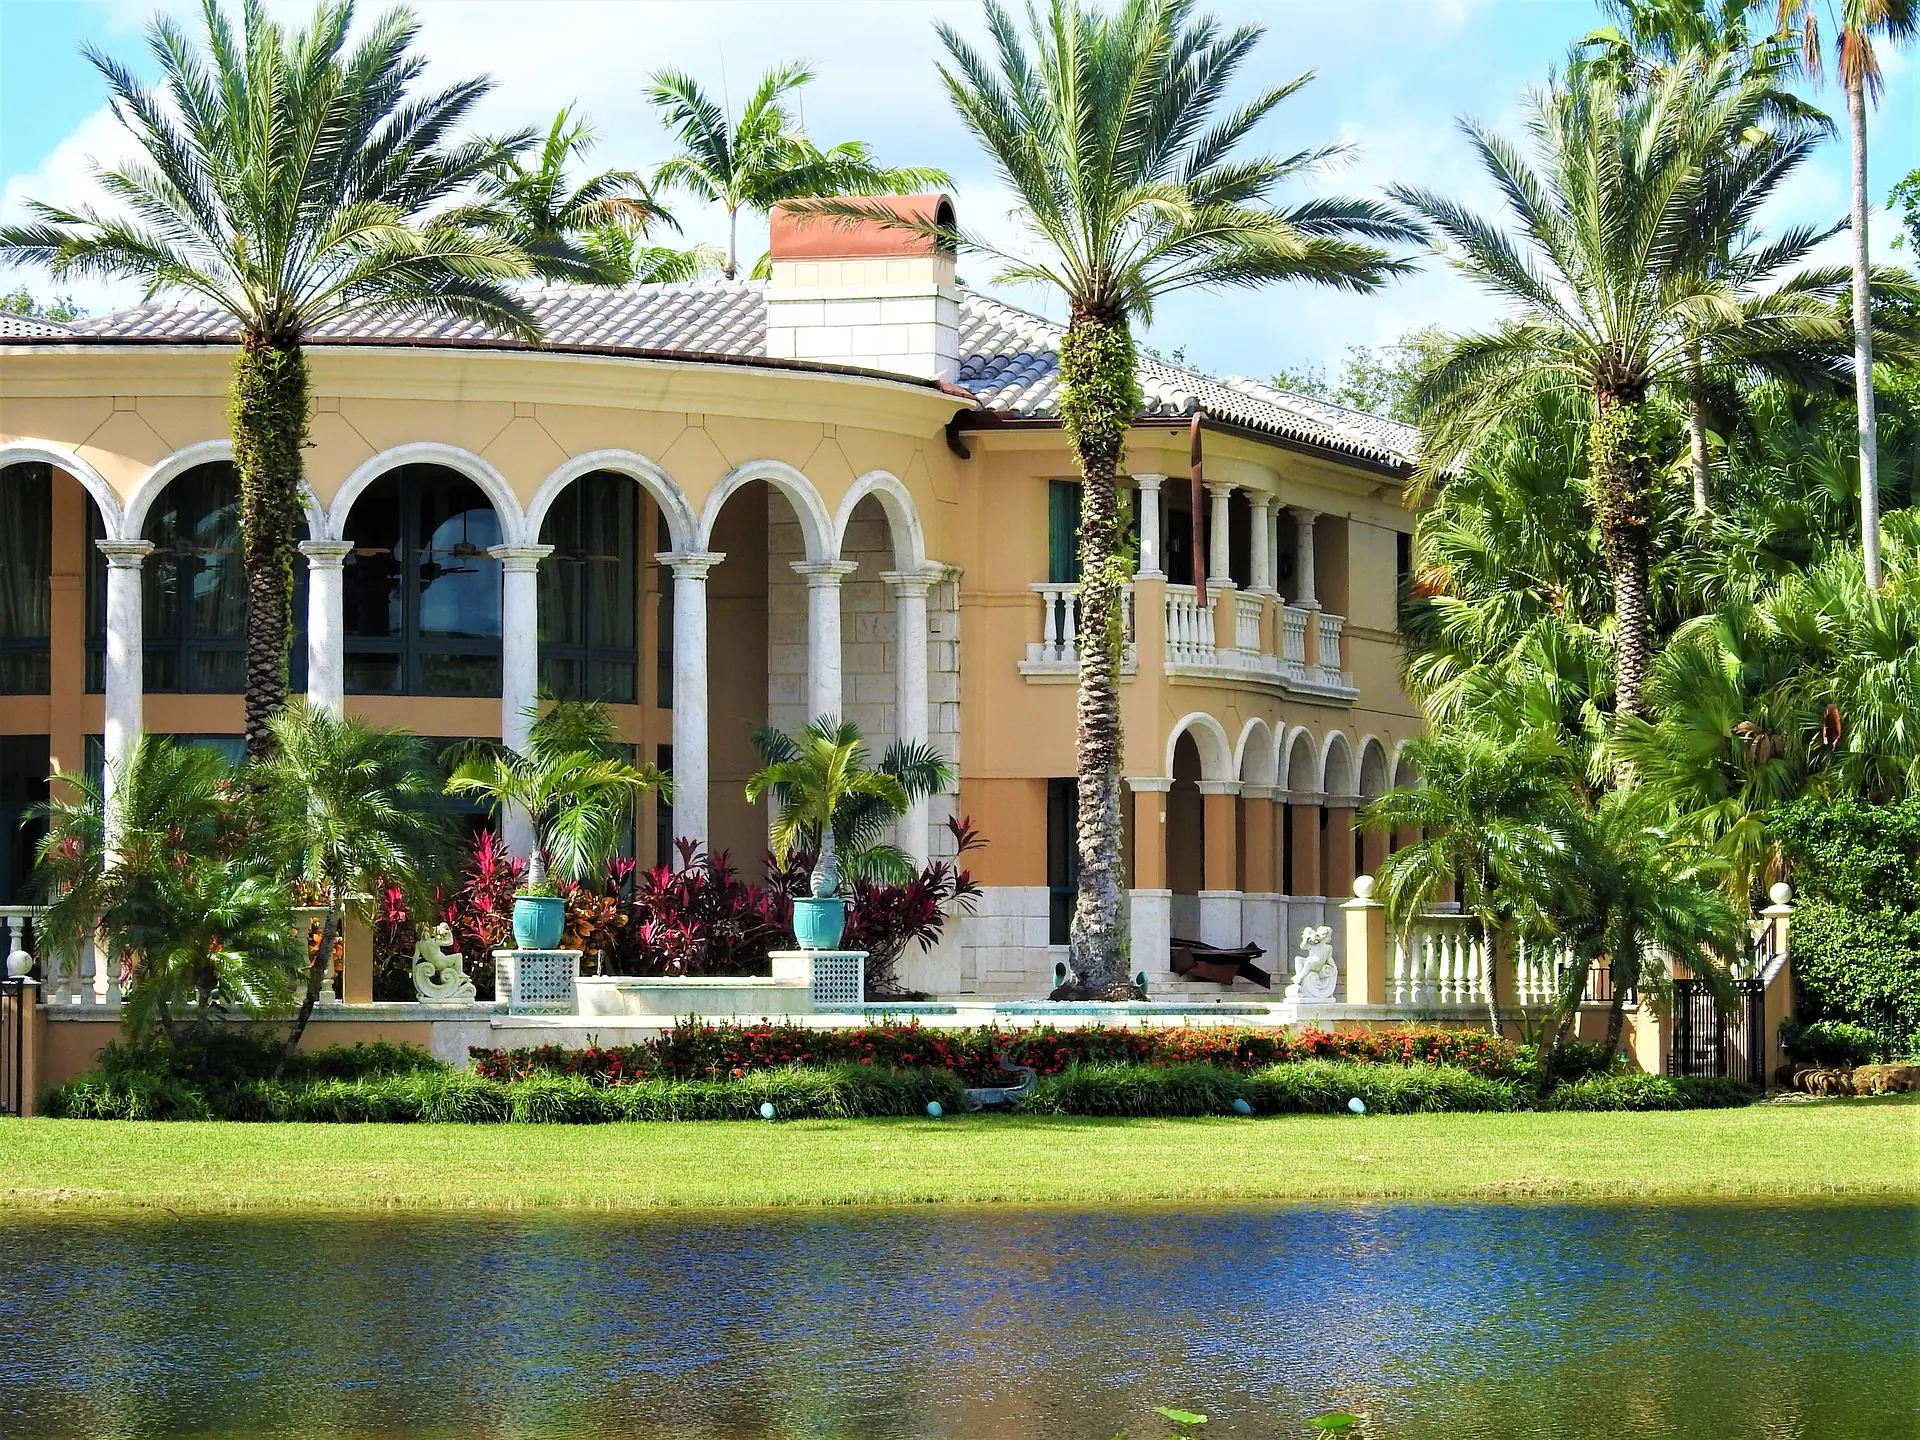 Rental properties in Central Florida